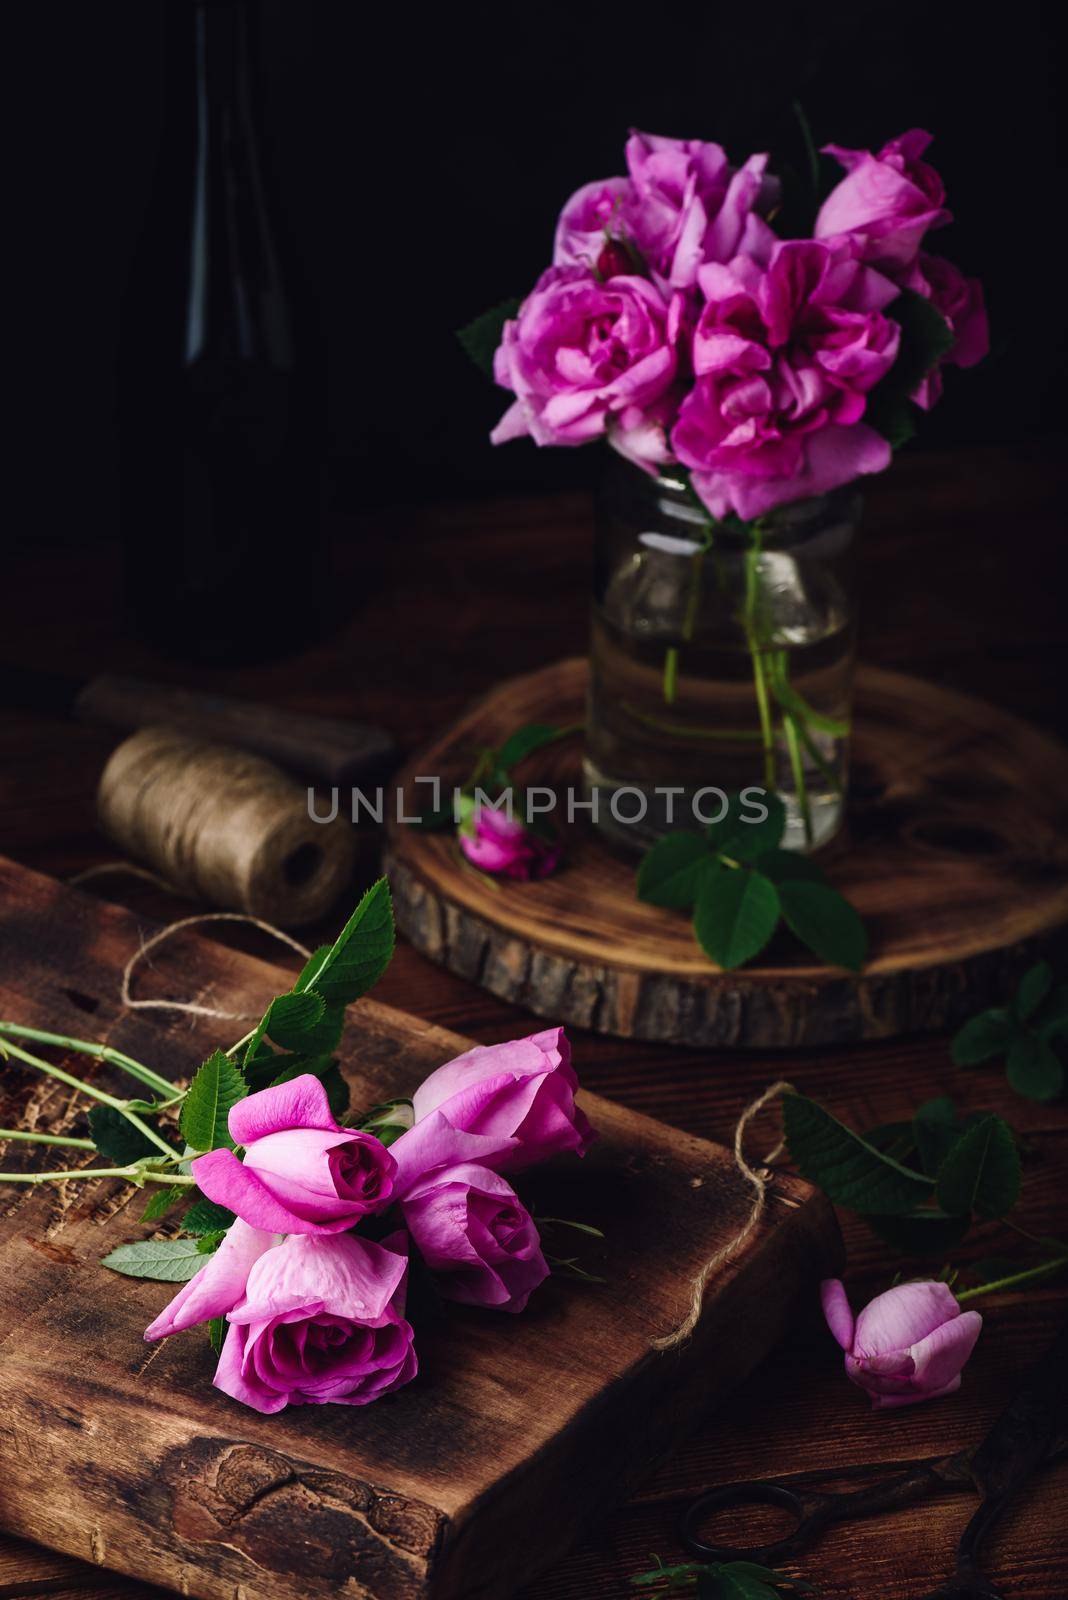 Pink garden roses on wooden table by Seva_blsv